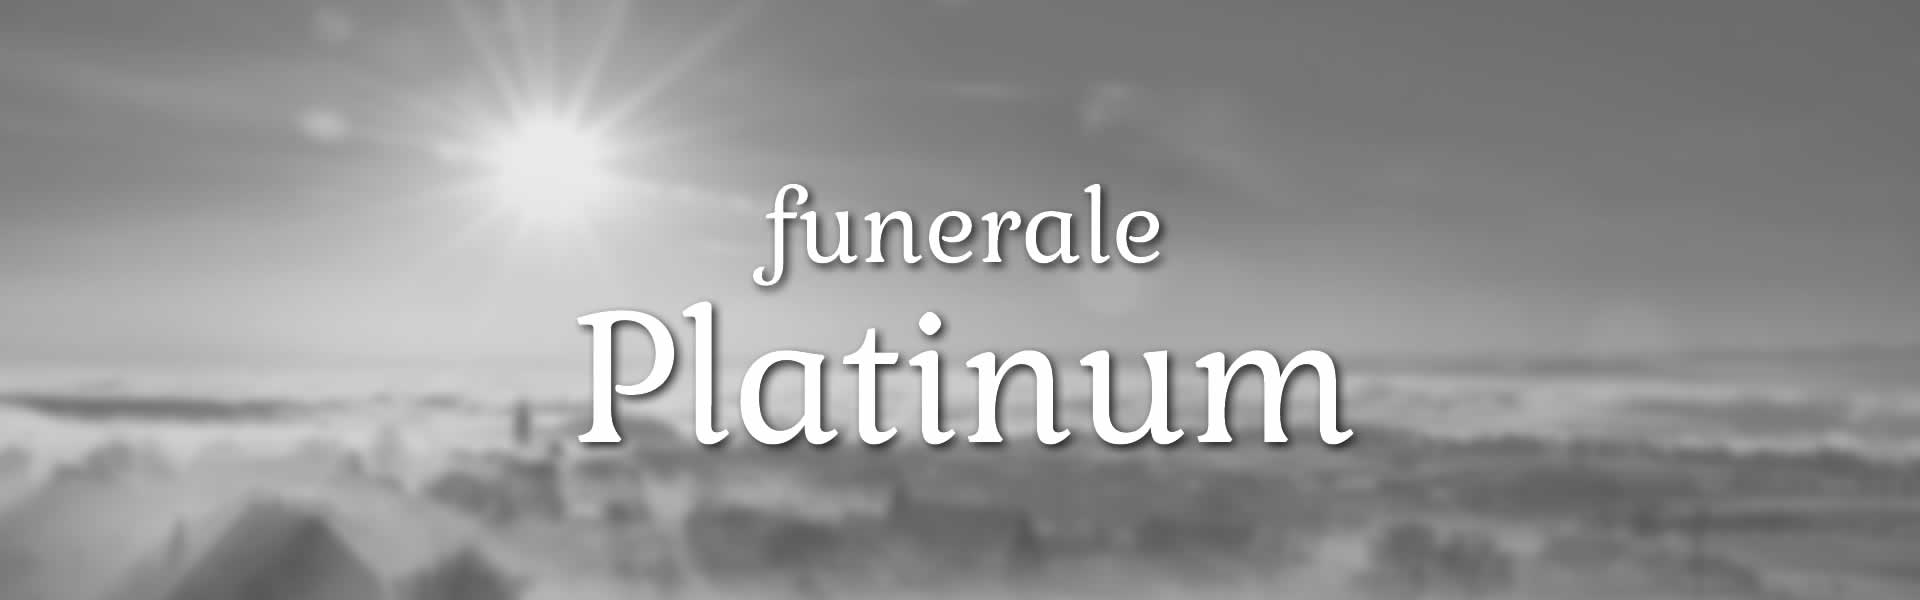 Prezzi funerali Platinum